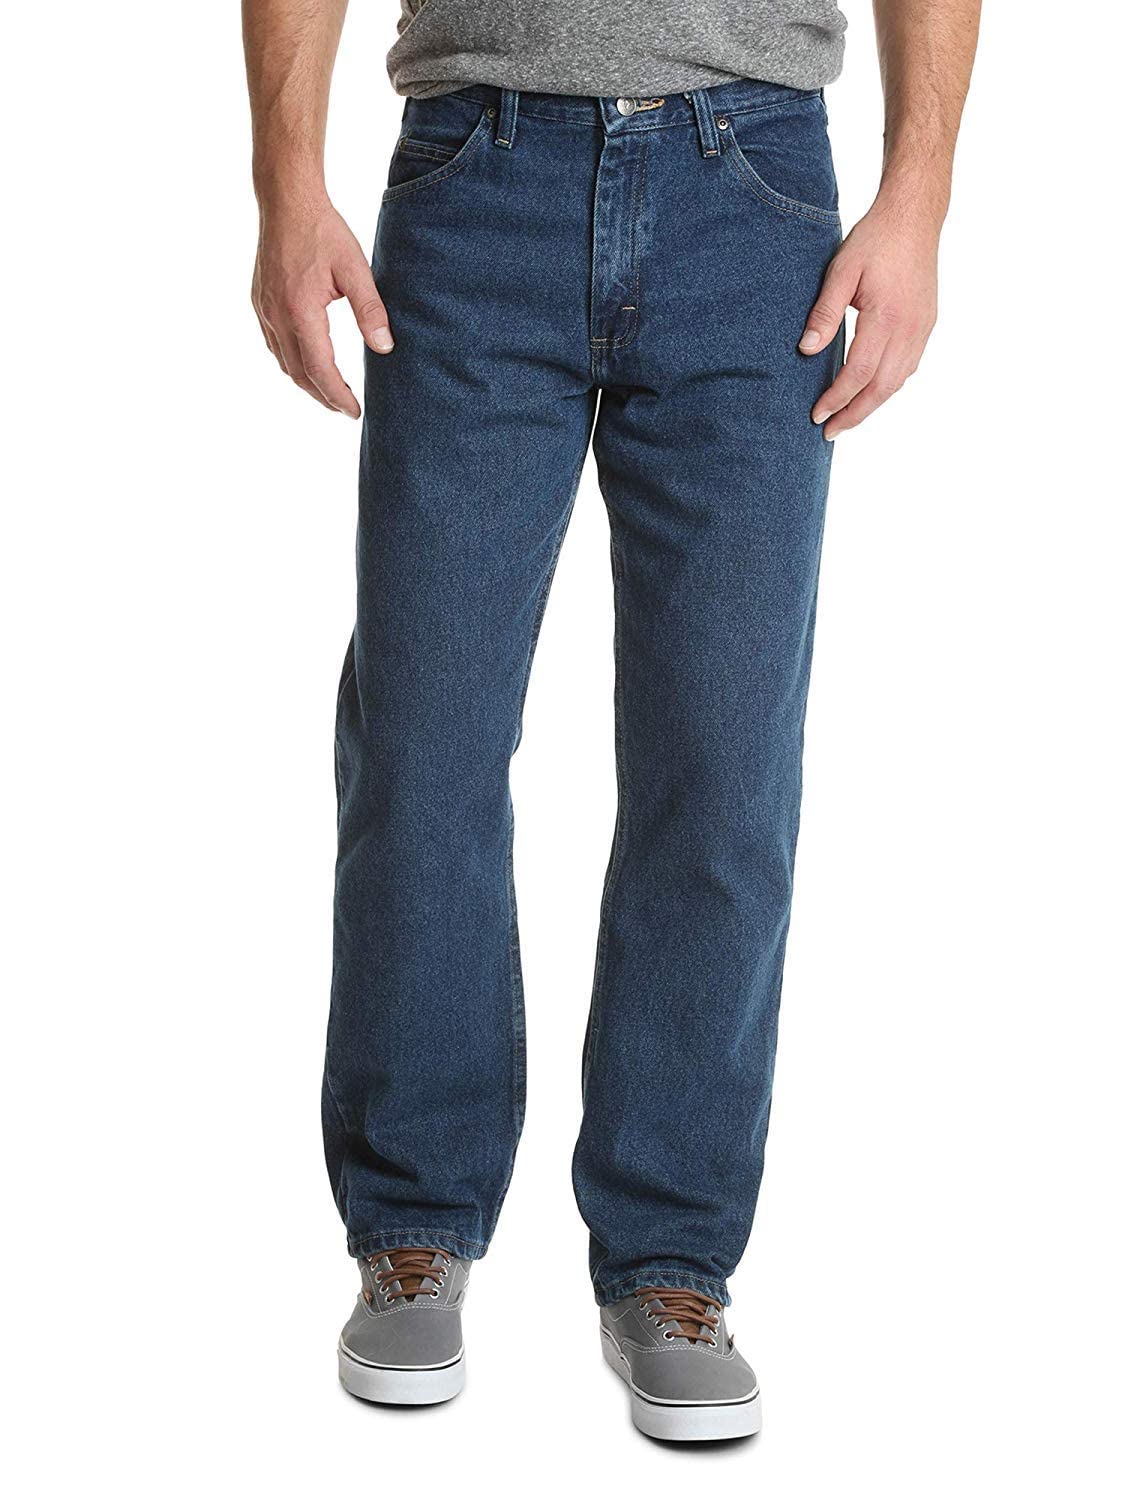 Wrangler Authentics Men's Big & Tall Classic 5-Pocket Relaxed Fit Cotton Jean, Dark Stonewash, 44W x 34L